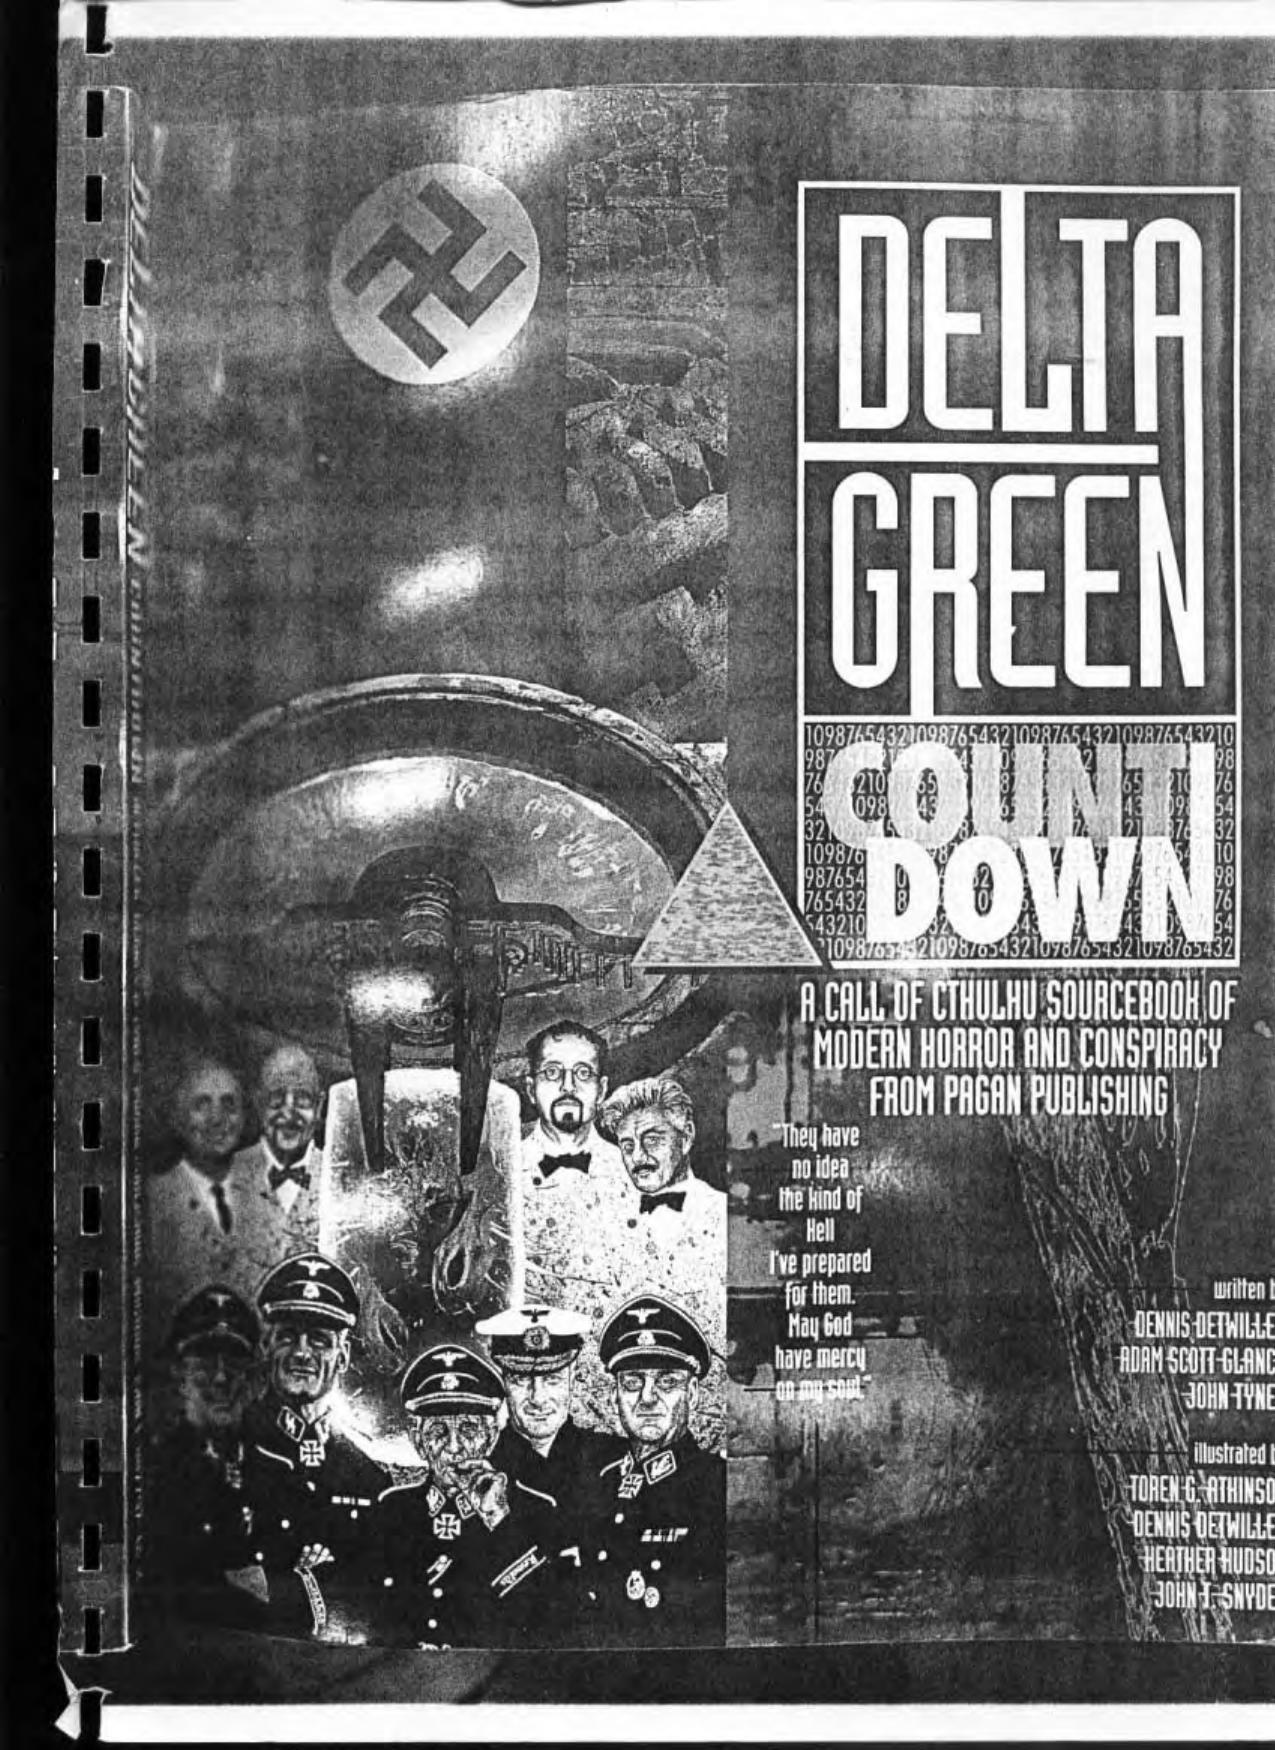 pp1008 - Delta Green OSurcebook - Countdown